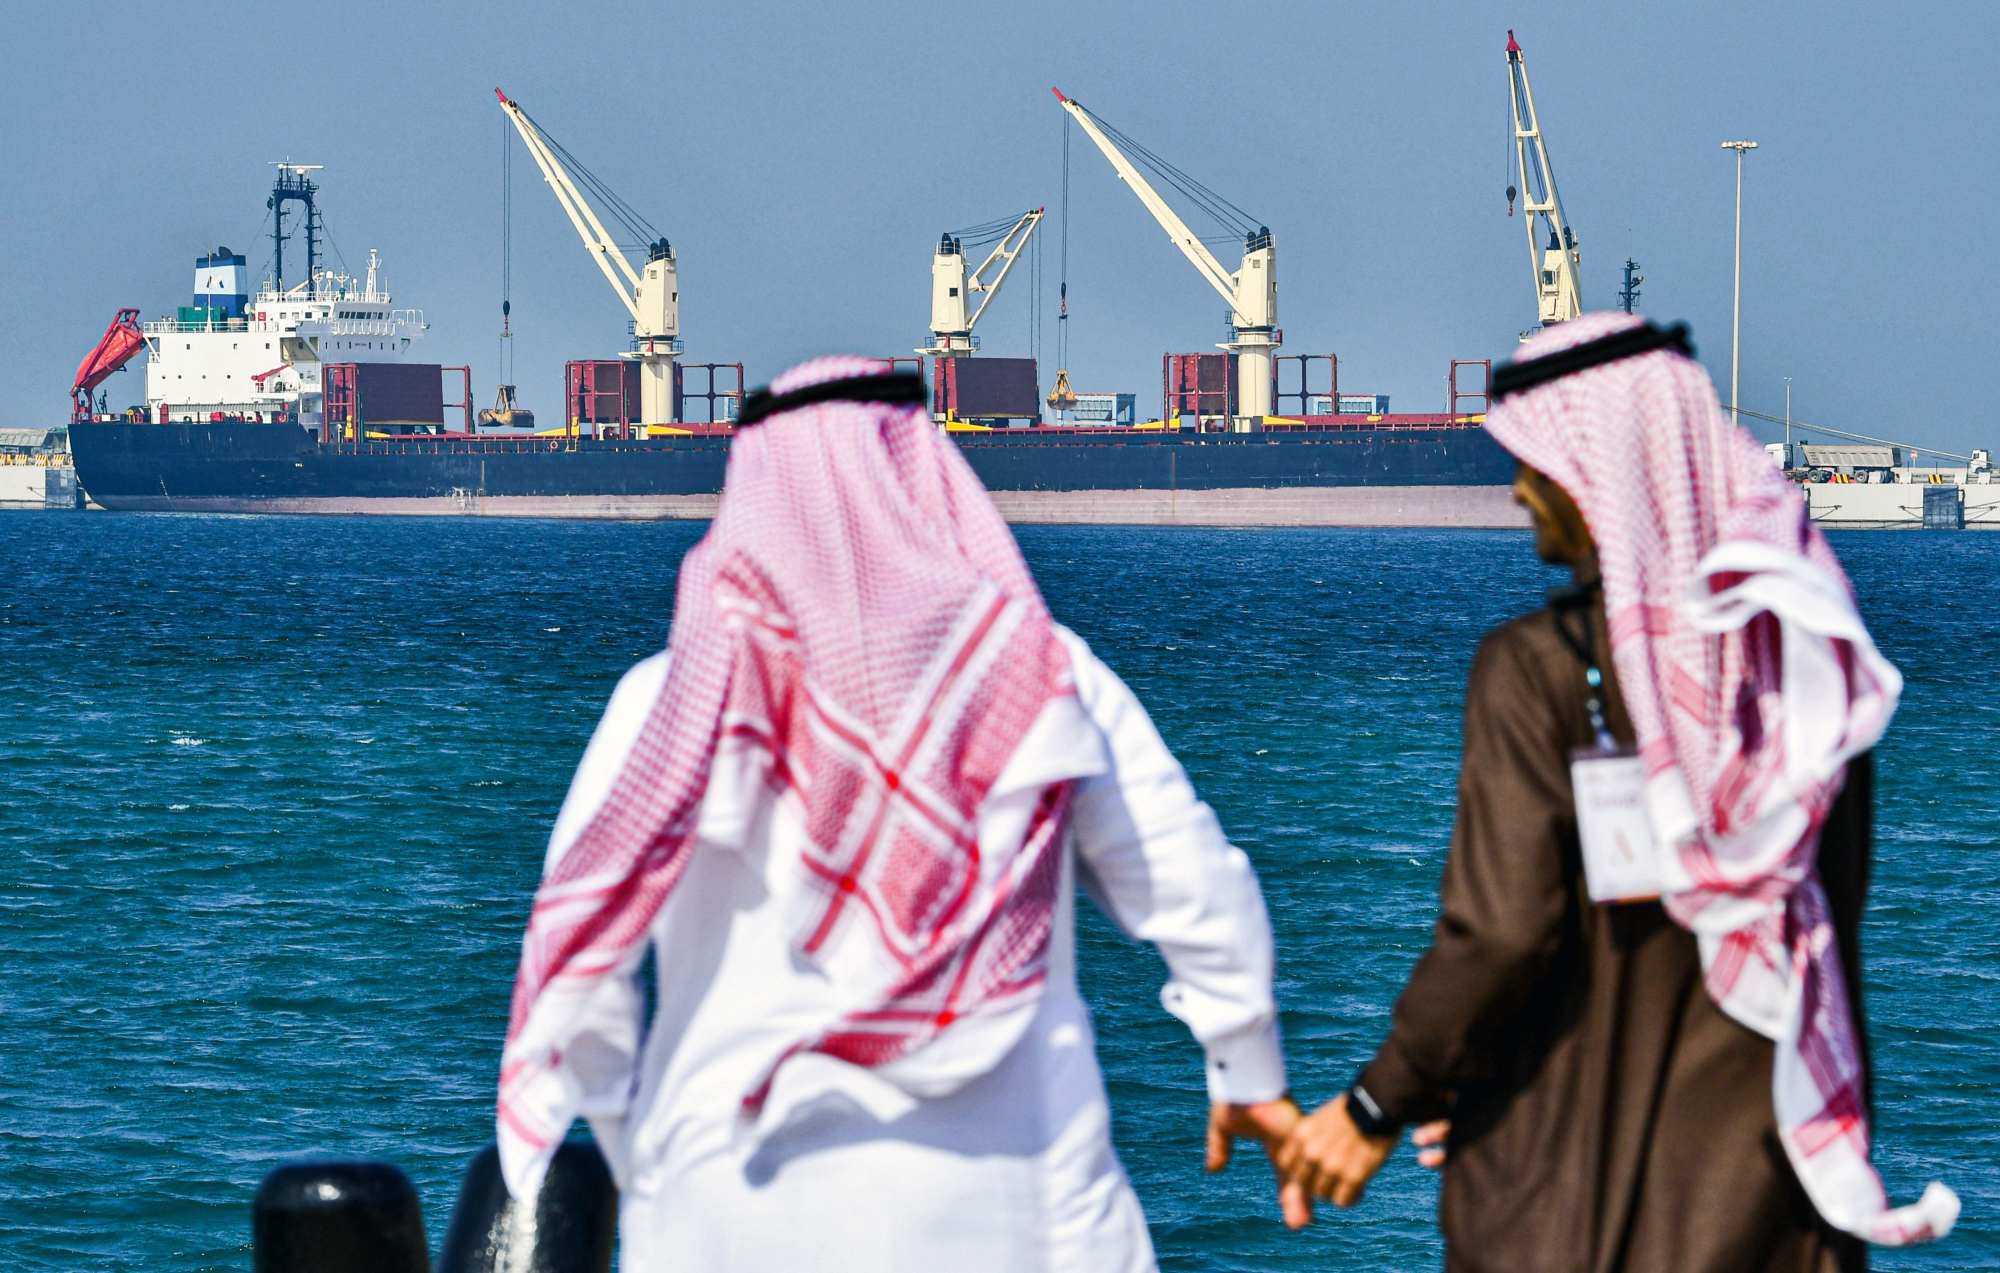 An oil tanker is seen at the port of Ras al-Khair in Saudi Arabia. File photo: AFP